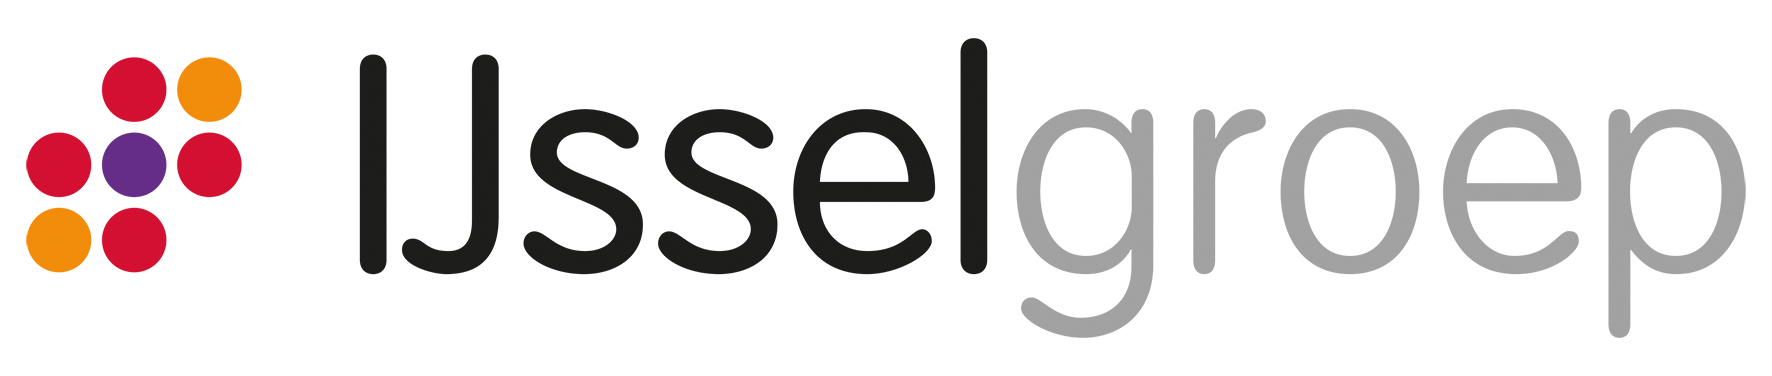 IJsselgroep logo org